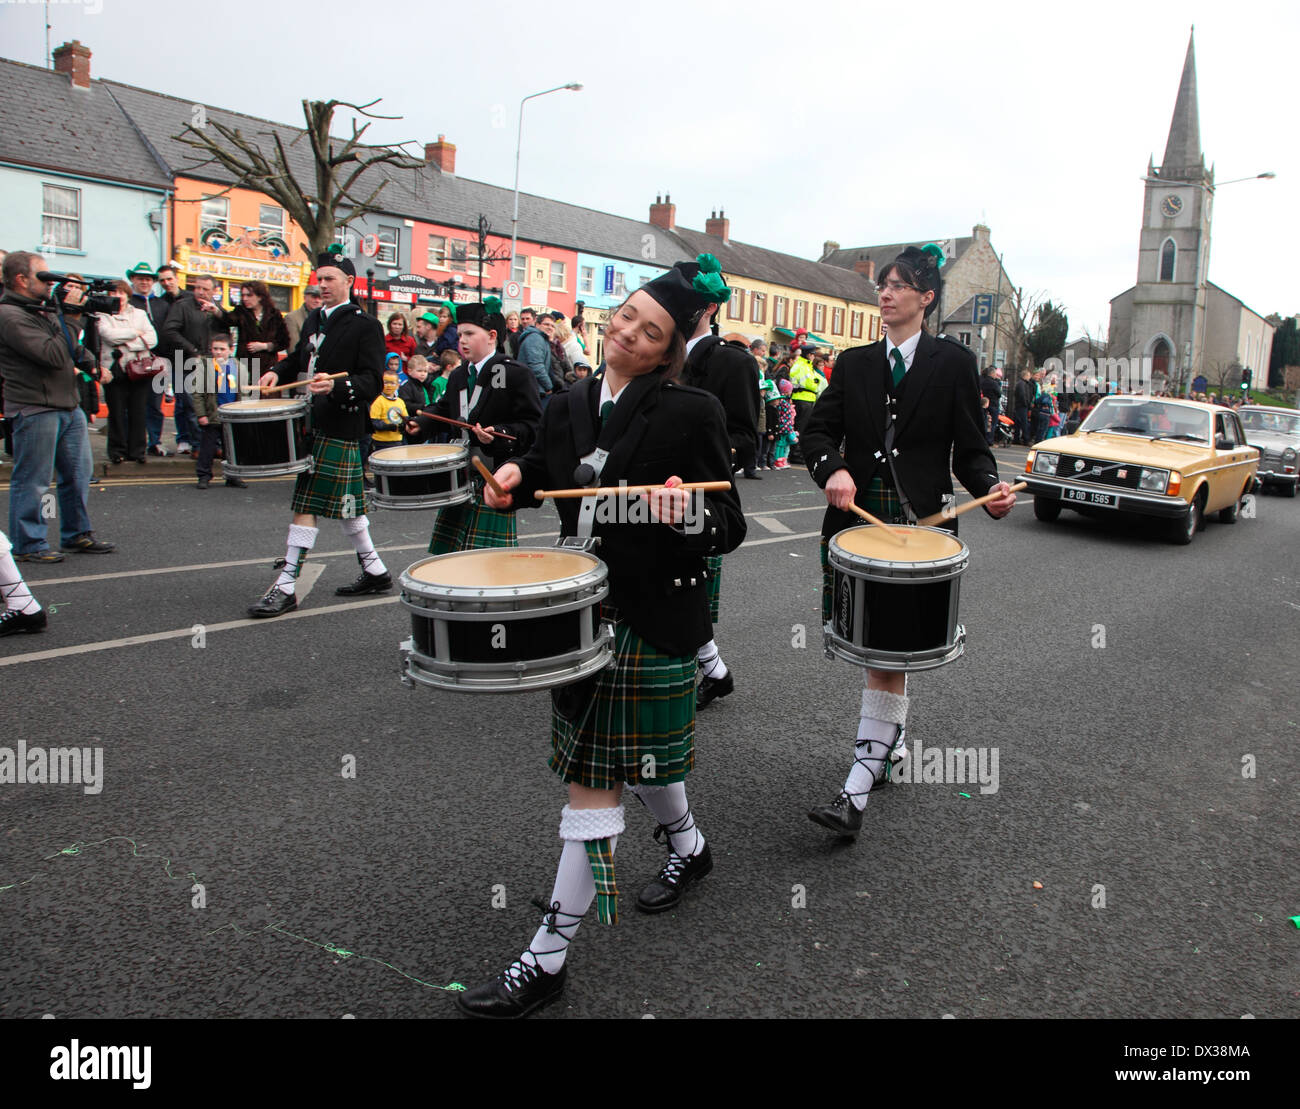 Mädchen-Schlagzeuger in der Corduff Rohr Bank in der St. Patricks Day Parade in Carrickmacross County Monaghan, Irland Stockfoto